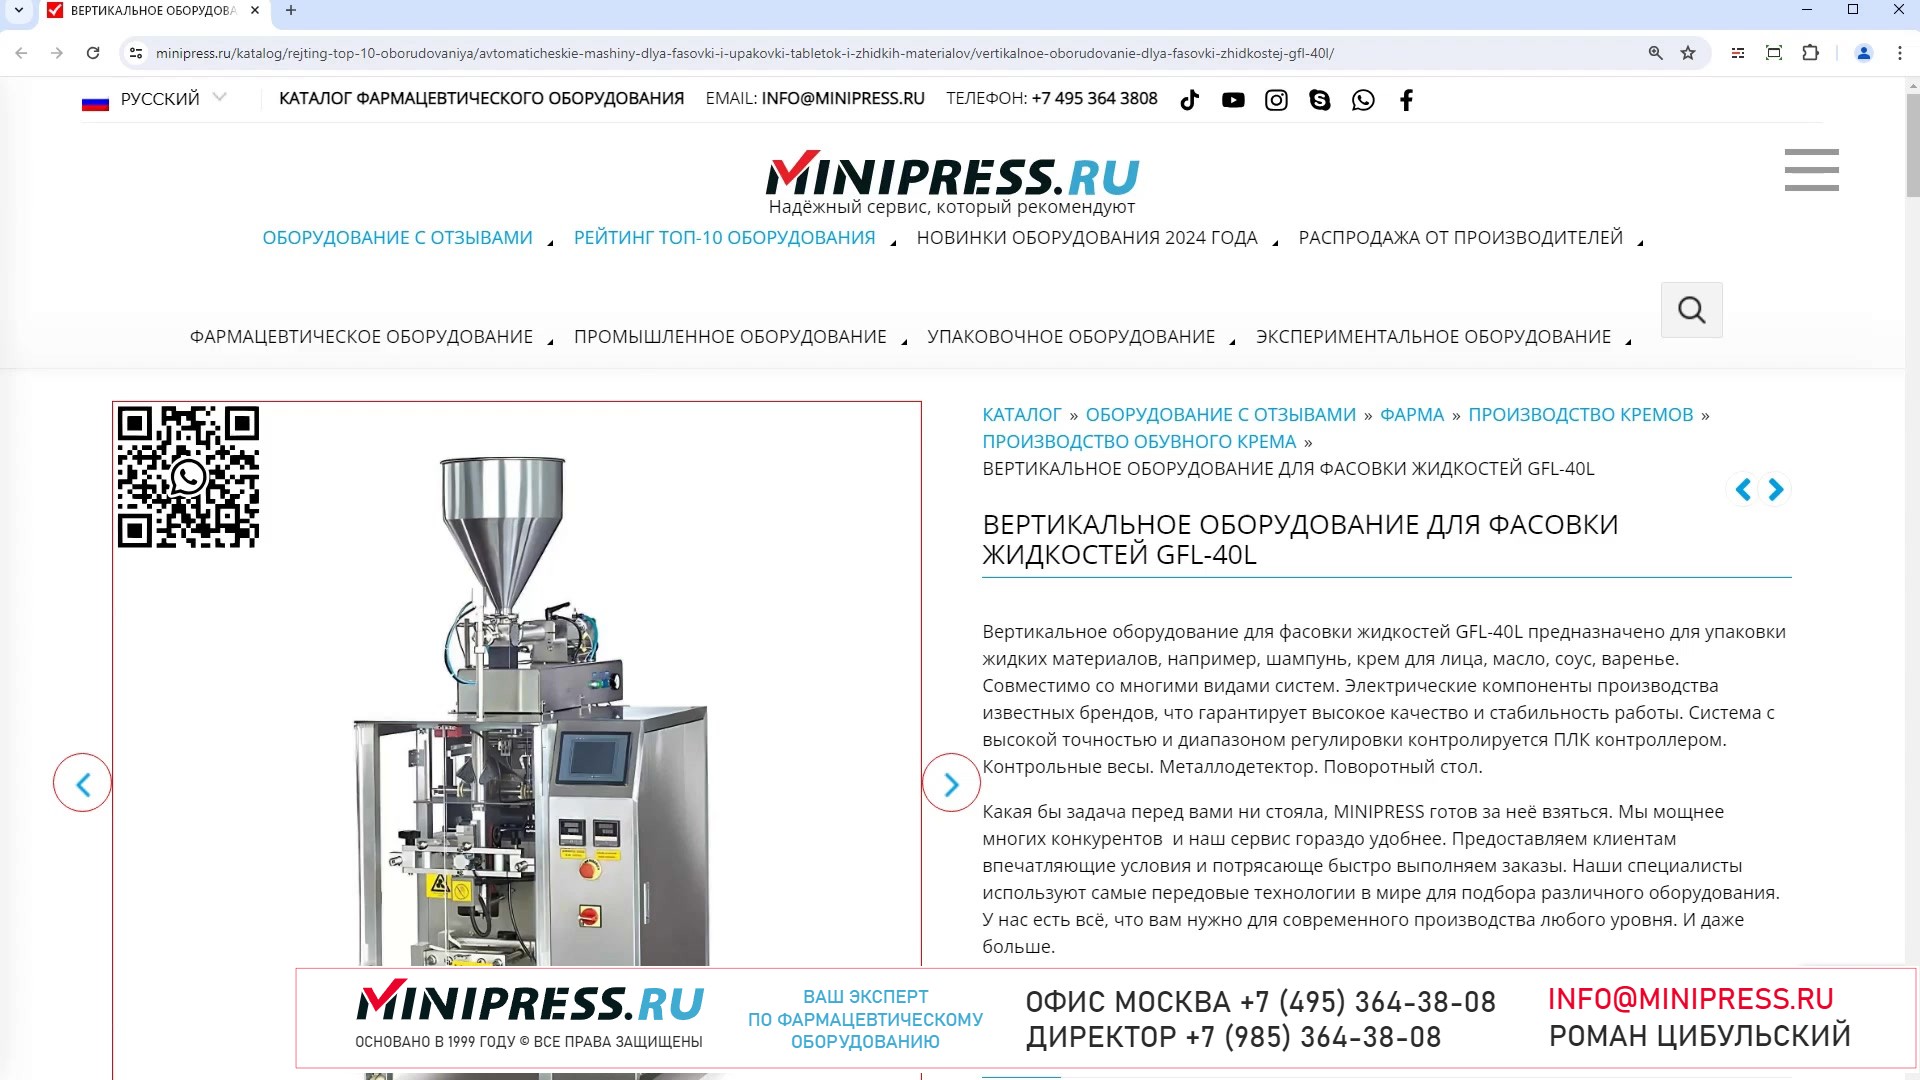 Minipress.ru Вертикальное оборудование для фасовки жидкостей GFL-40L